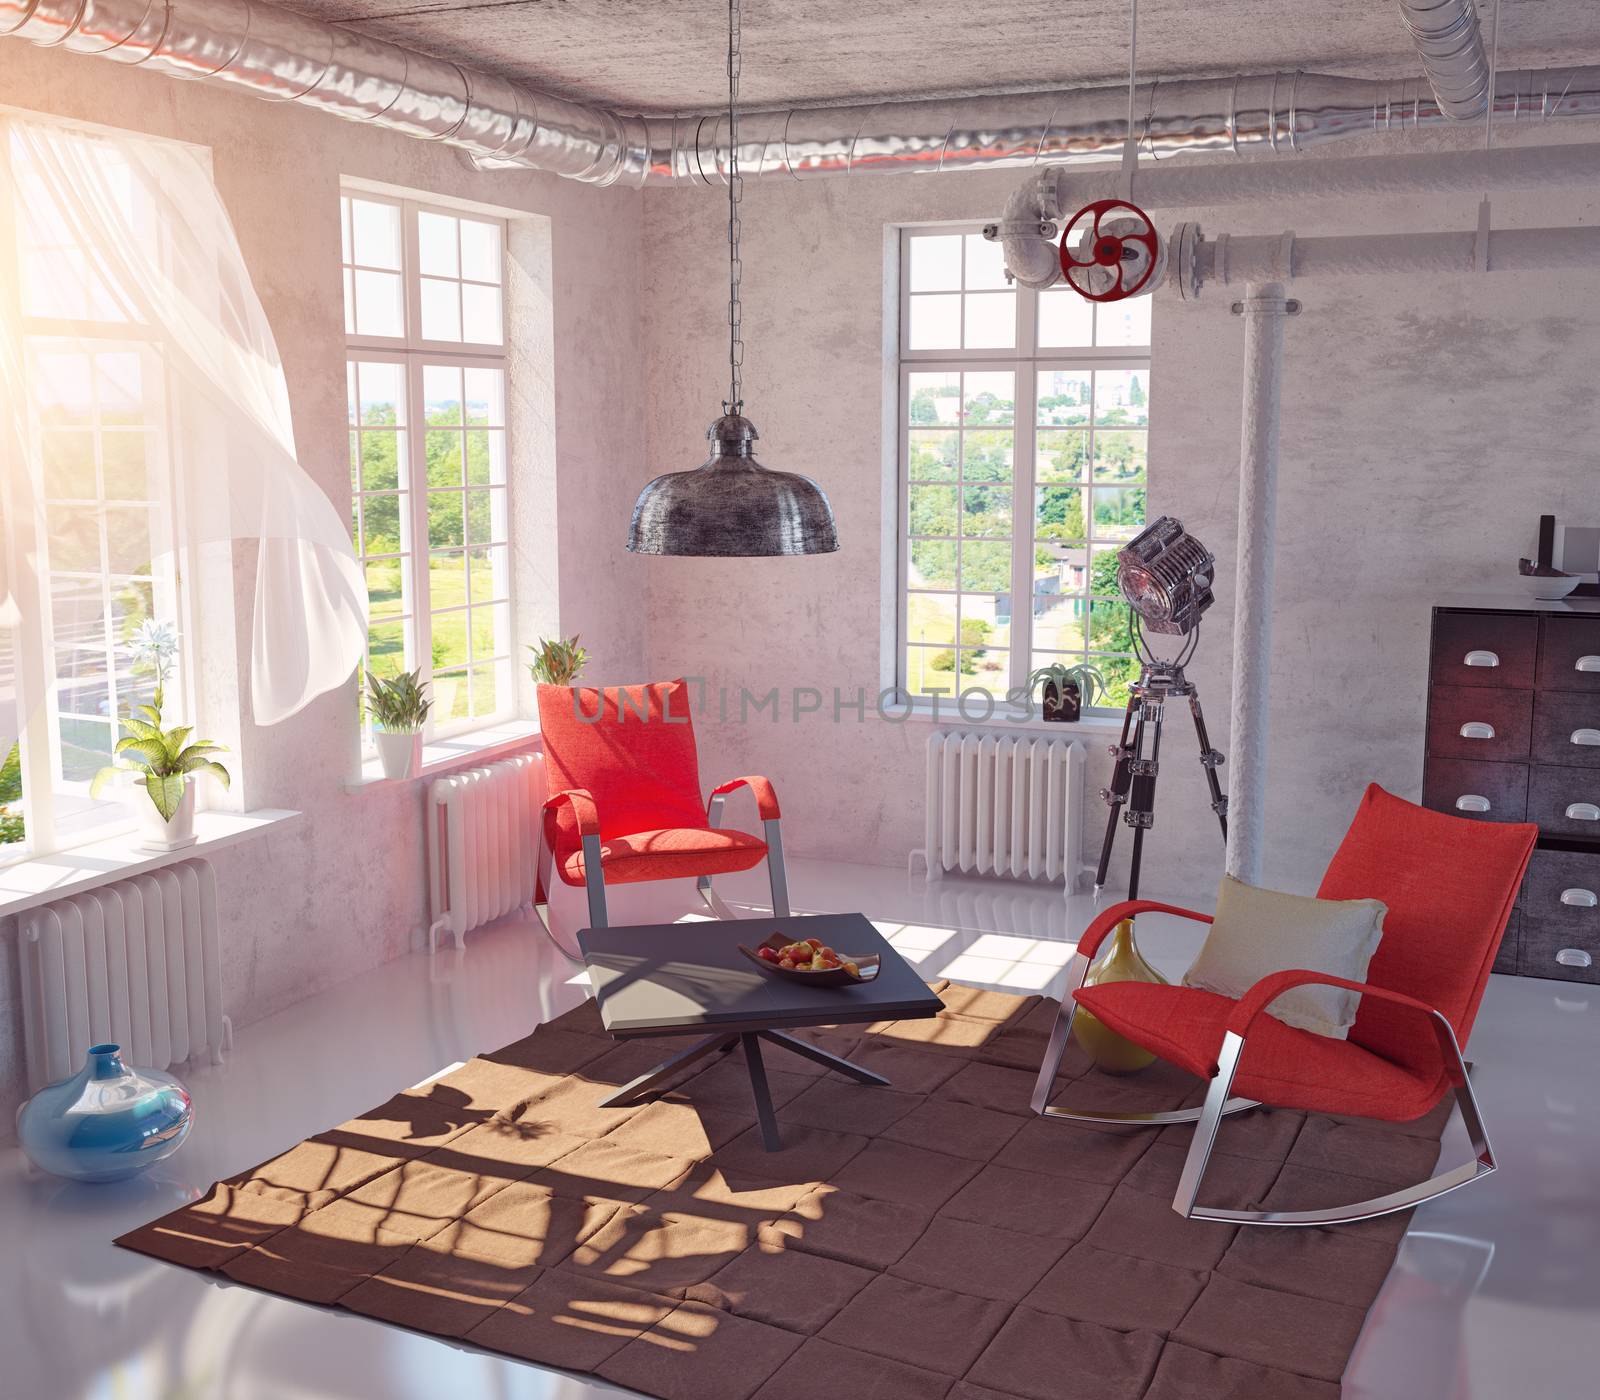 the modern loft interior concept design (3d render) 